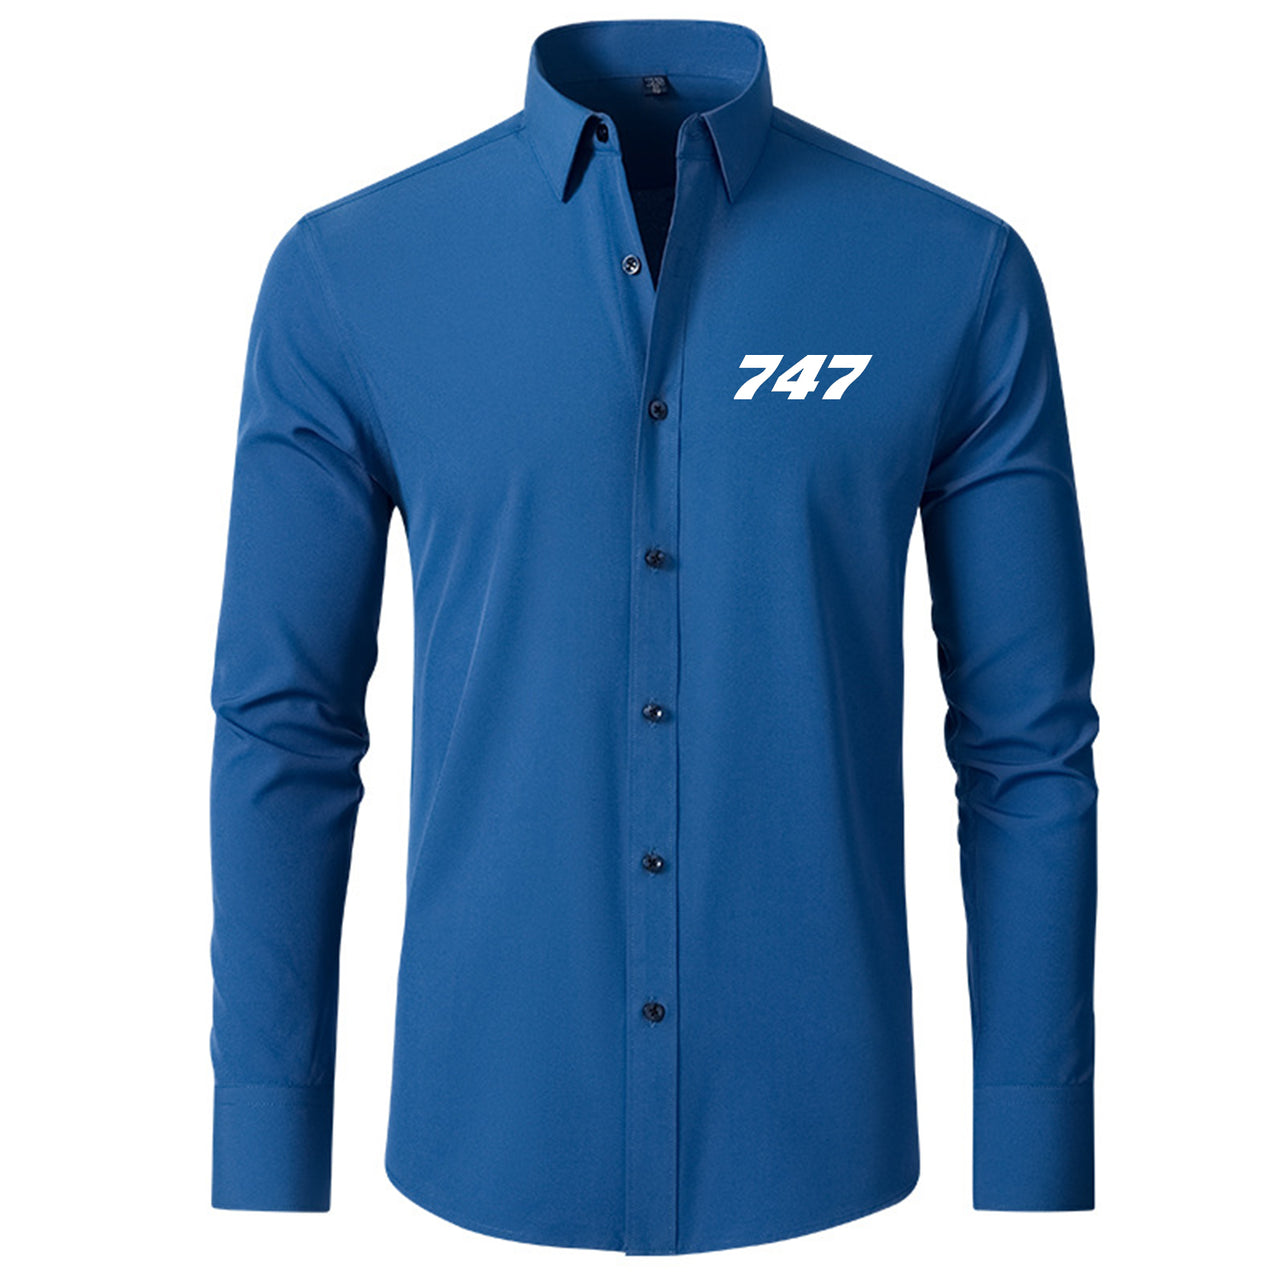 747 Flat Text Designed Long Sleeve Shirts